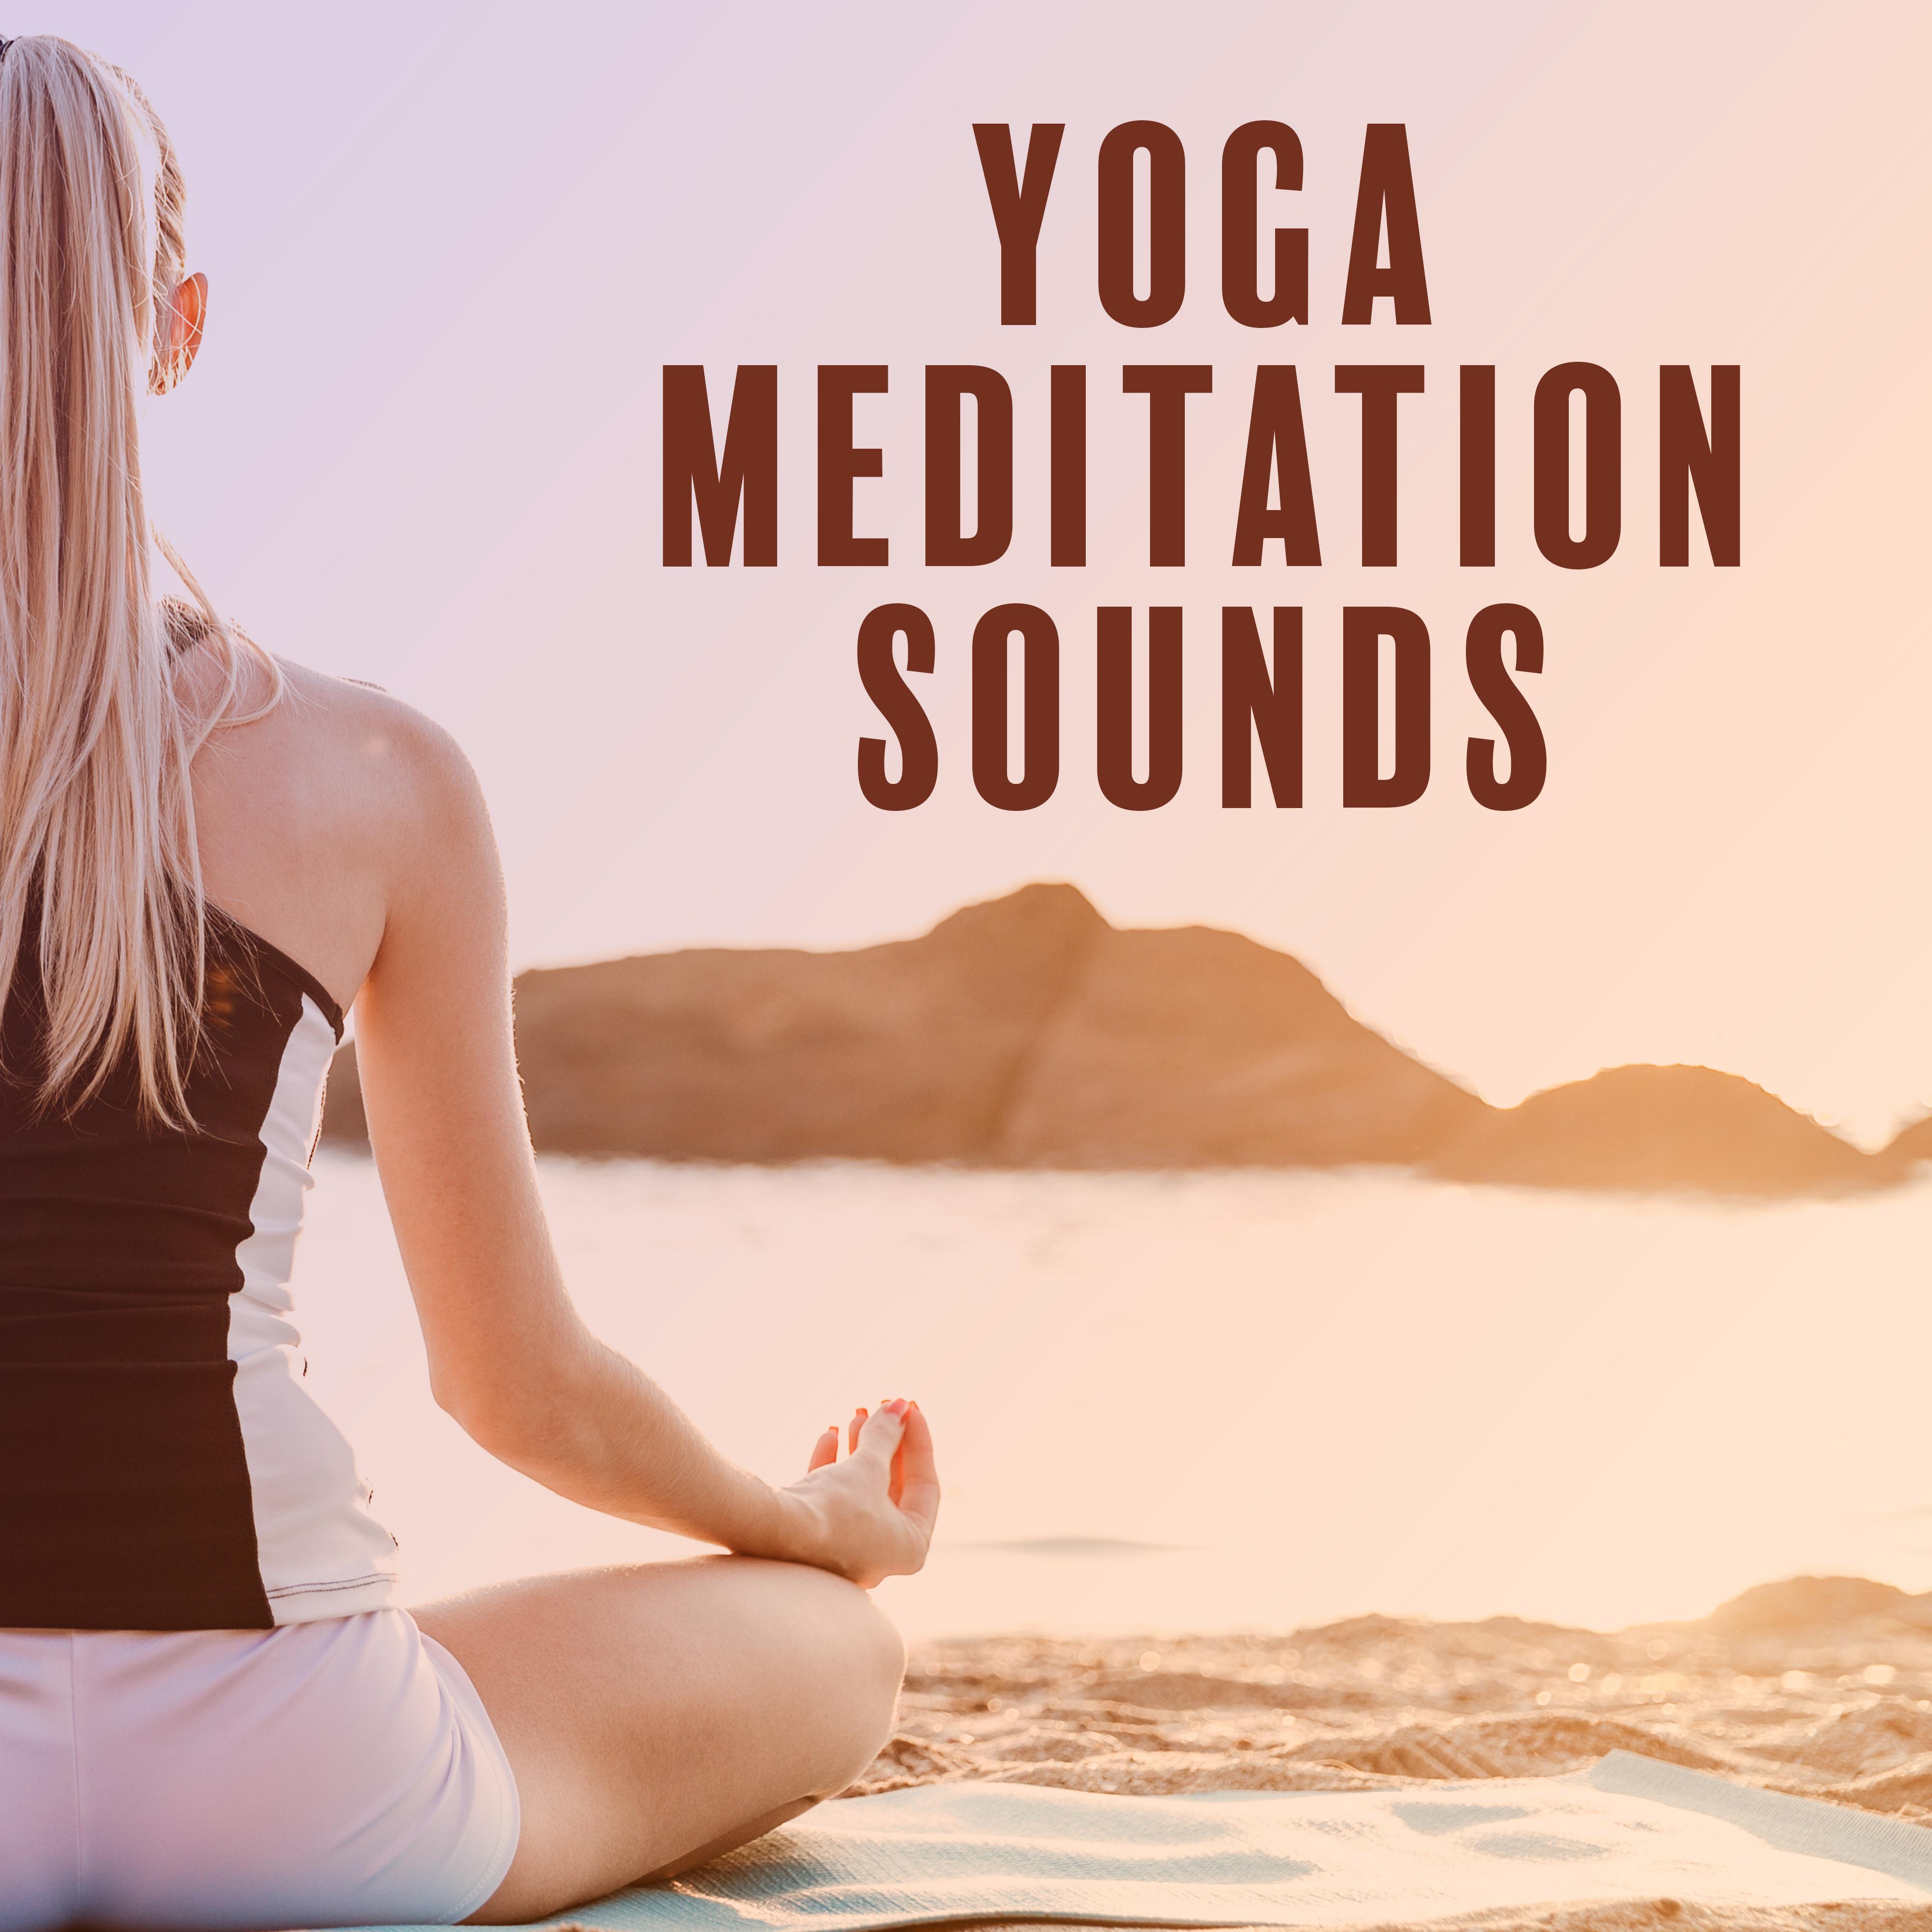 Yoga Meditation Sounds  Calming New Age Music for Yoga Training, Spirit Relaxation, Calmness Mind  Body